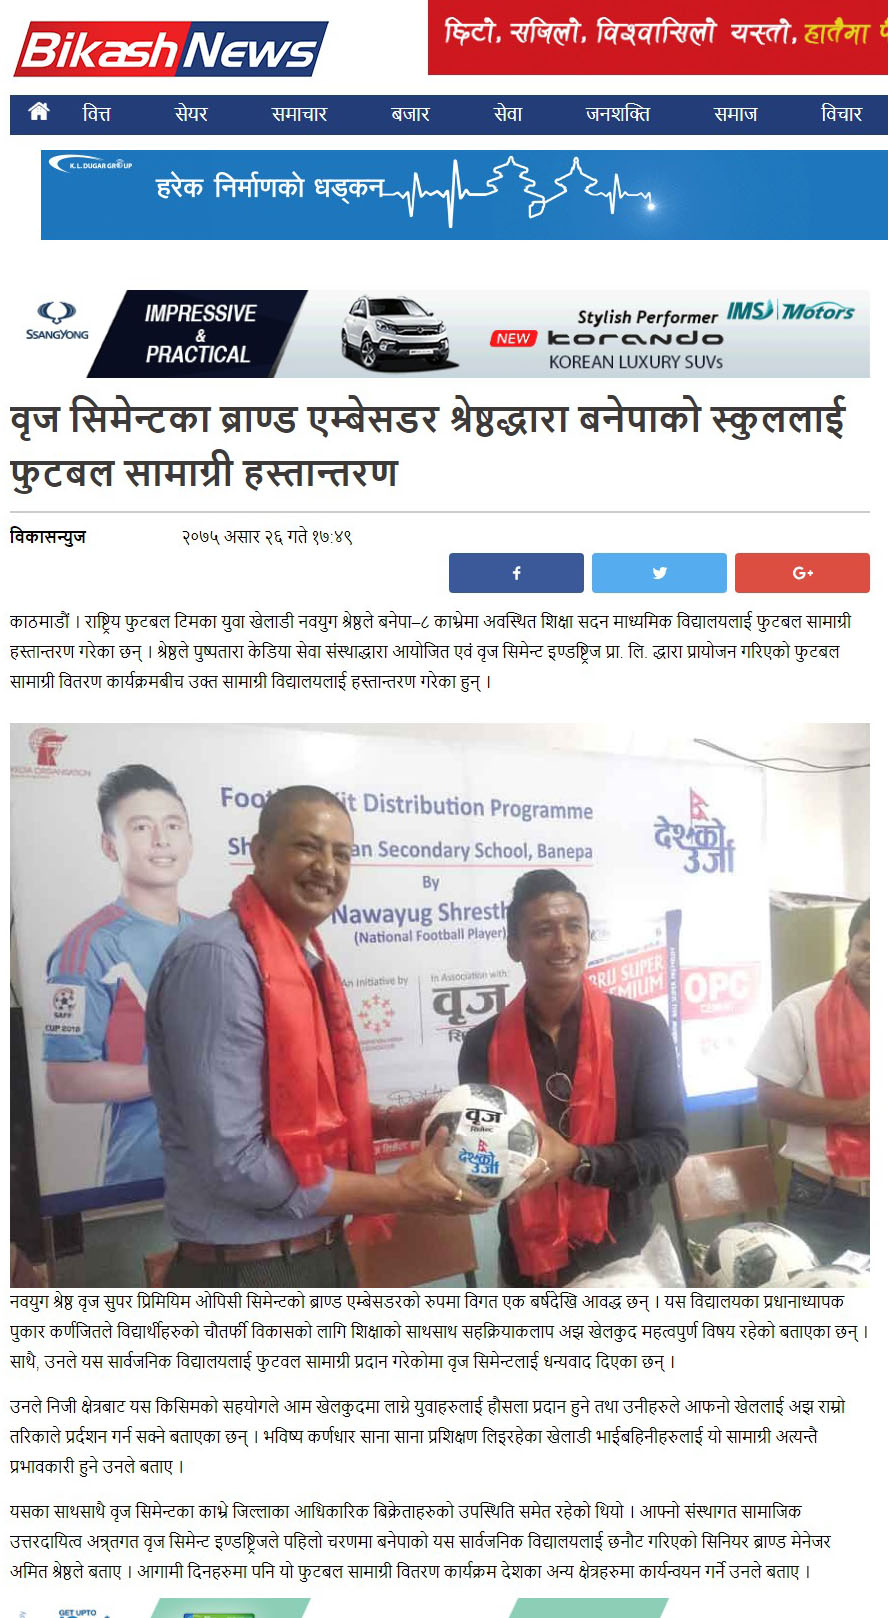 Distribution of Football Kit at Sikshya Sadan School Banepa 2075